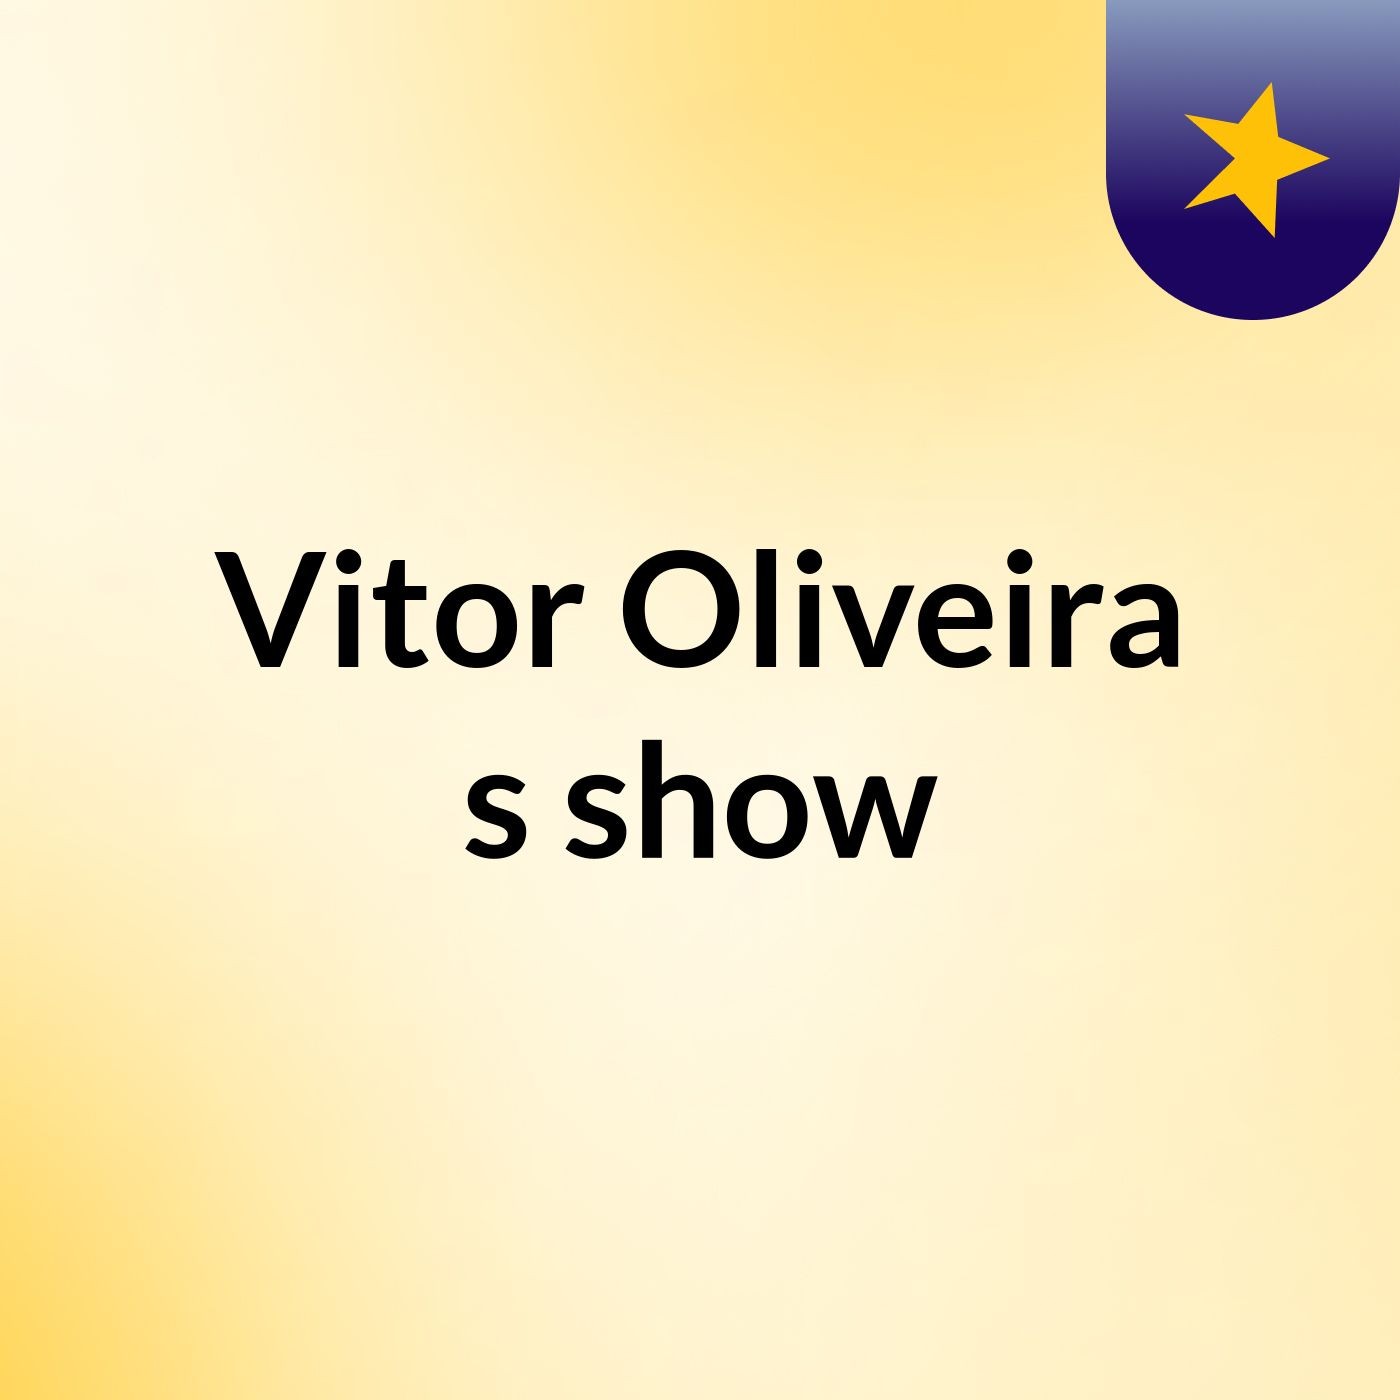 Vitor Oliveira's show